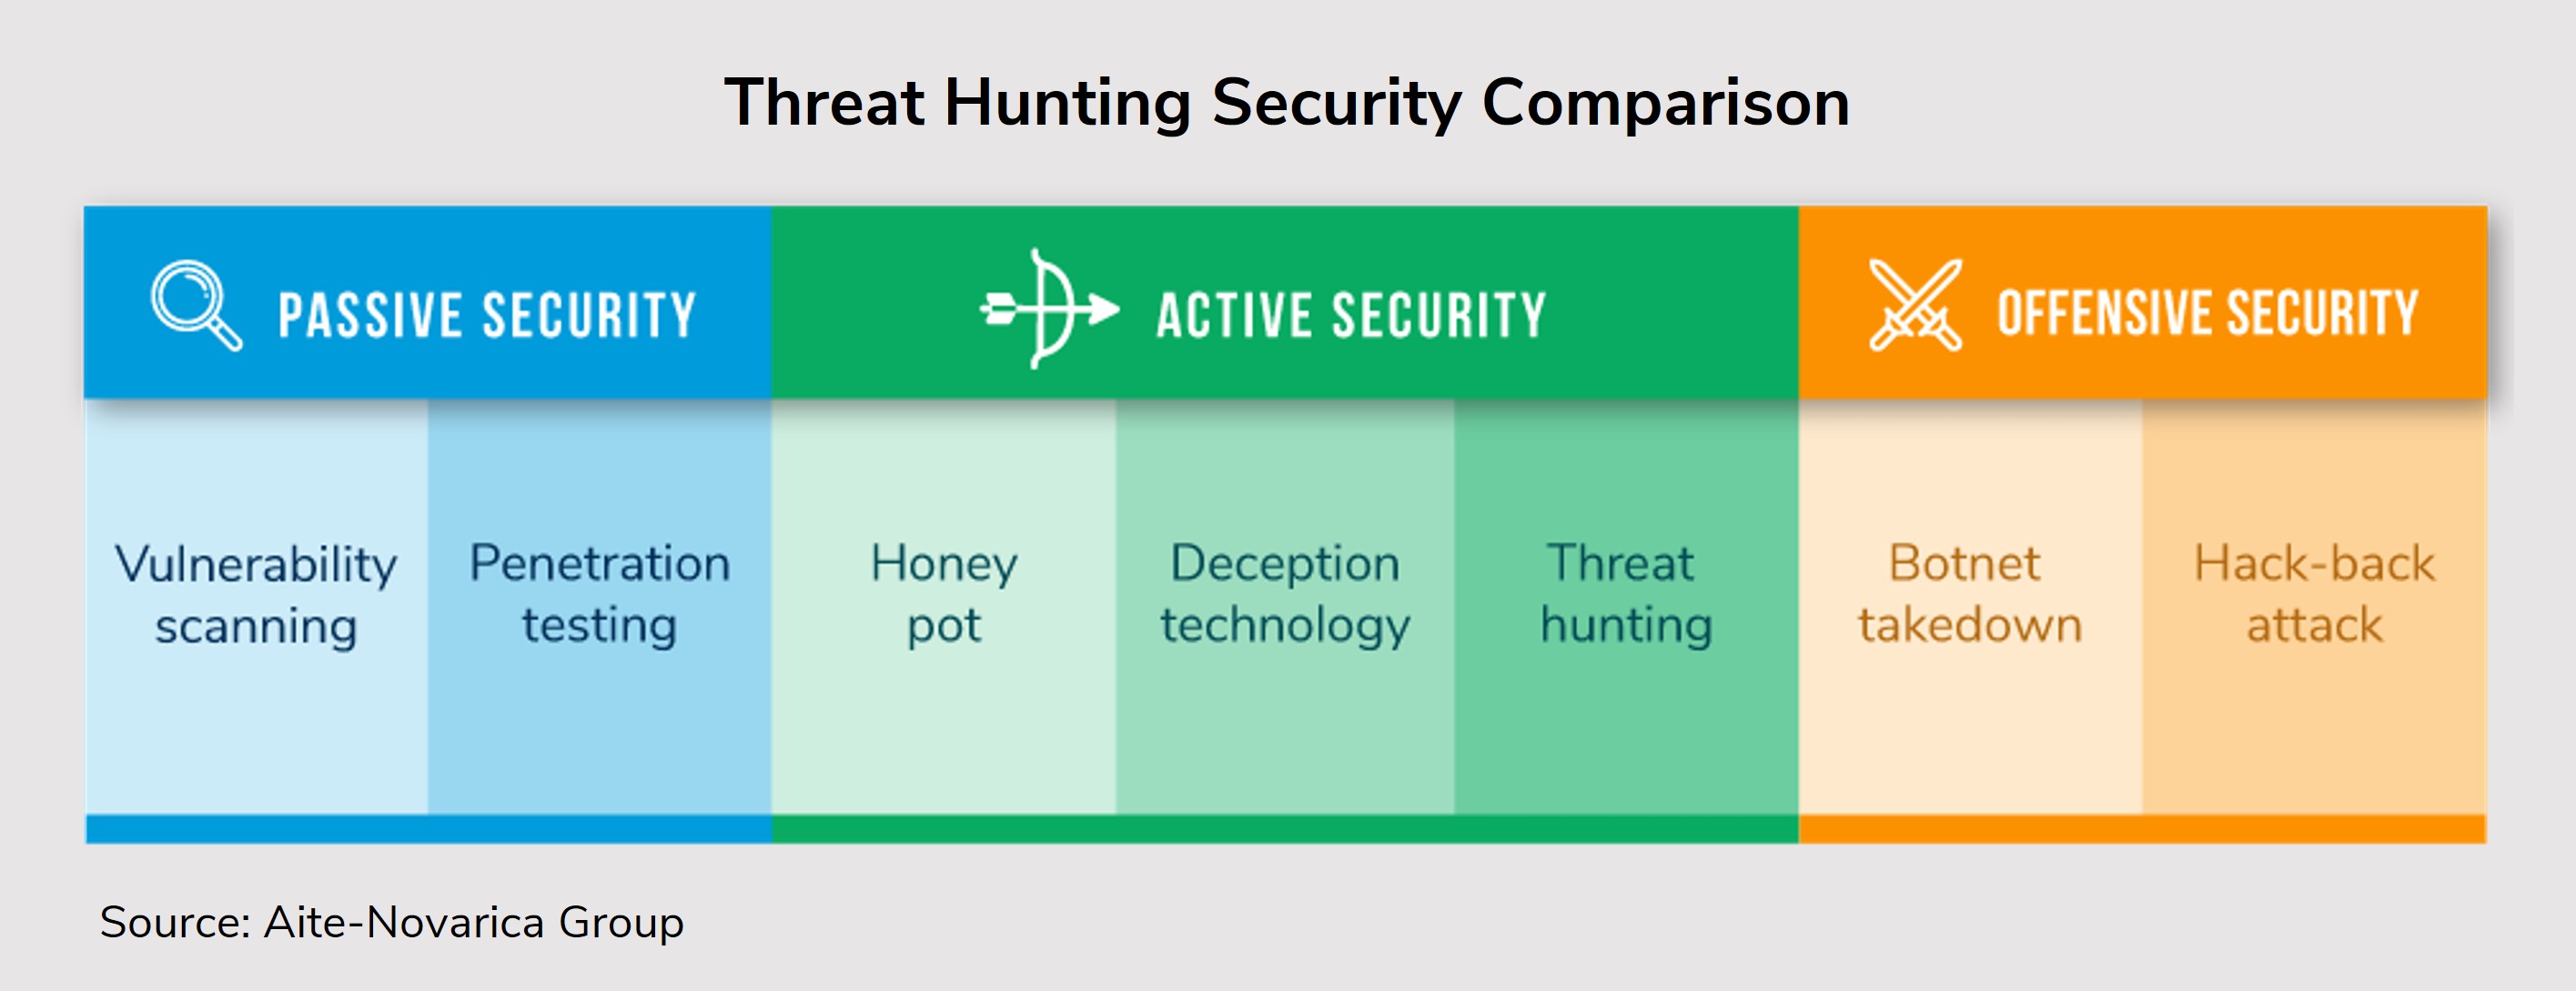 active security threats